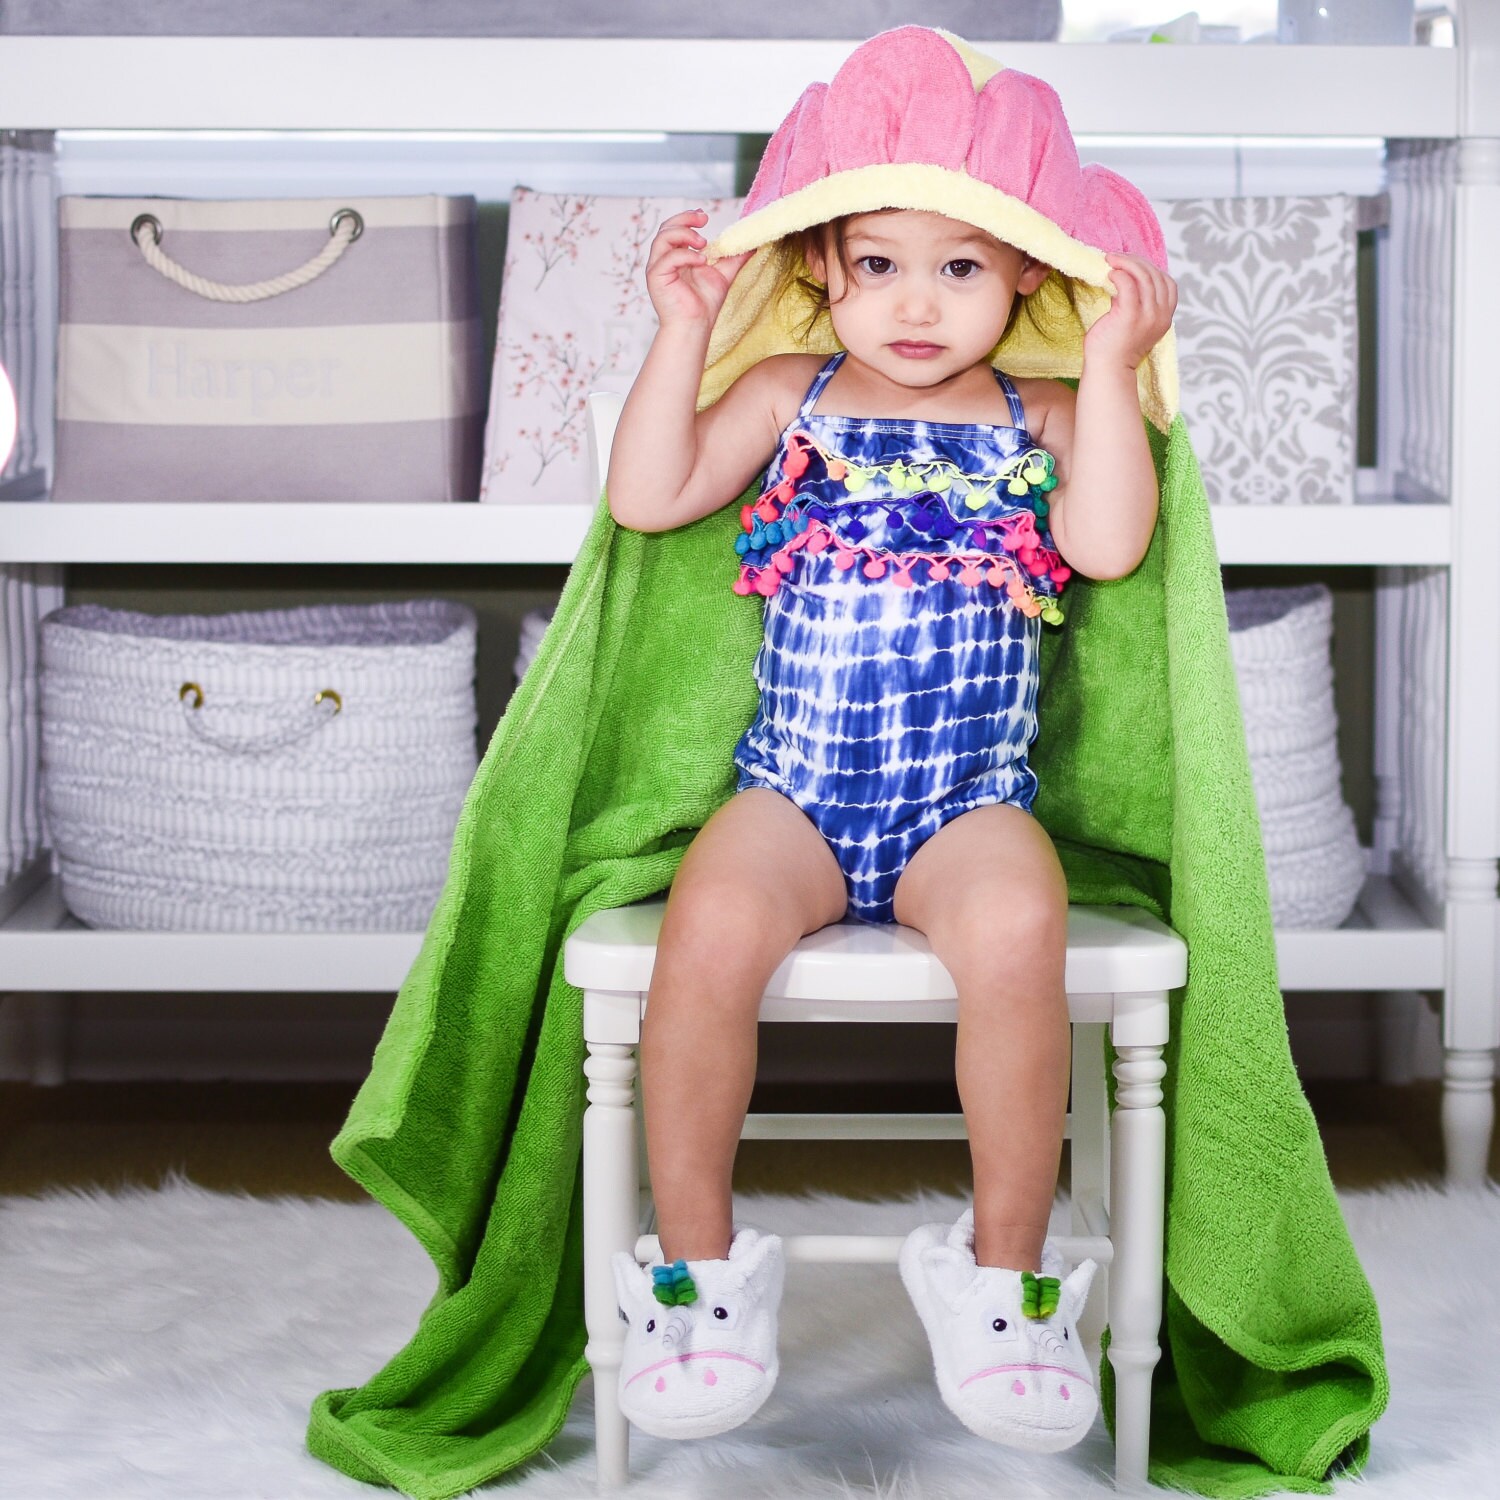 Tradineur - Capa/Toalla de baño para bebé - Diseño de osito en luna -  Garantiza el confort del bebé - 100 x 100 cm - Color Rosa